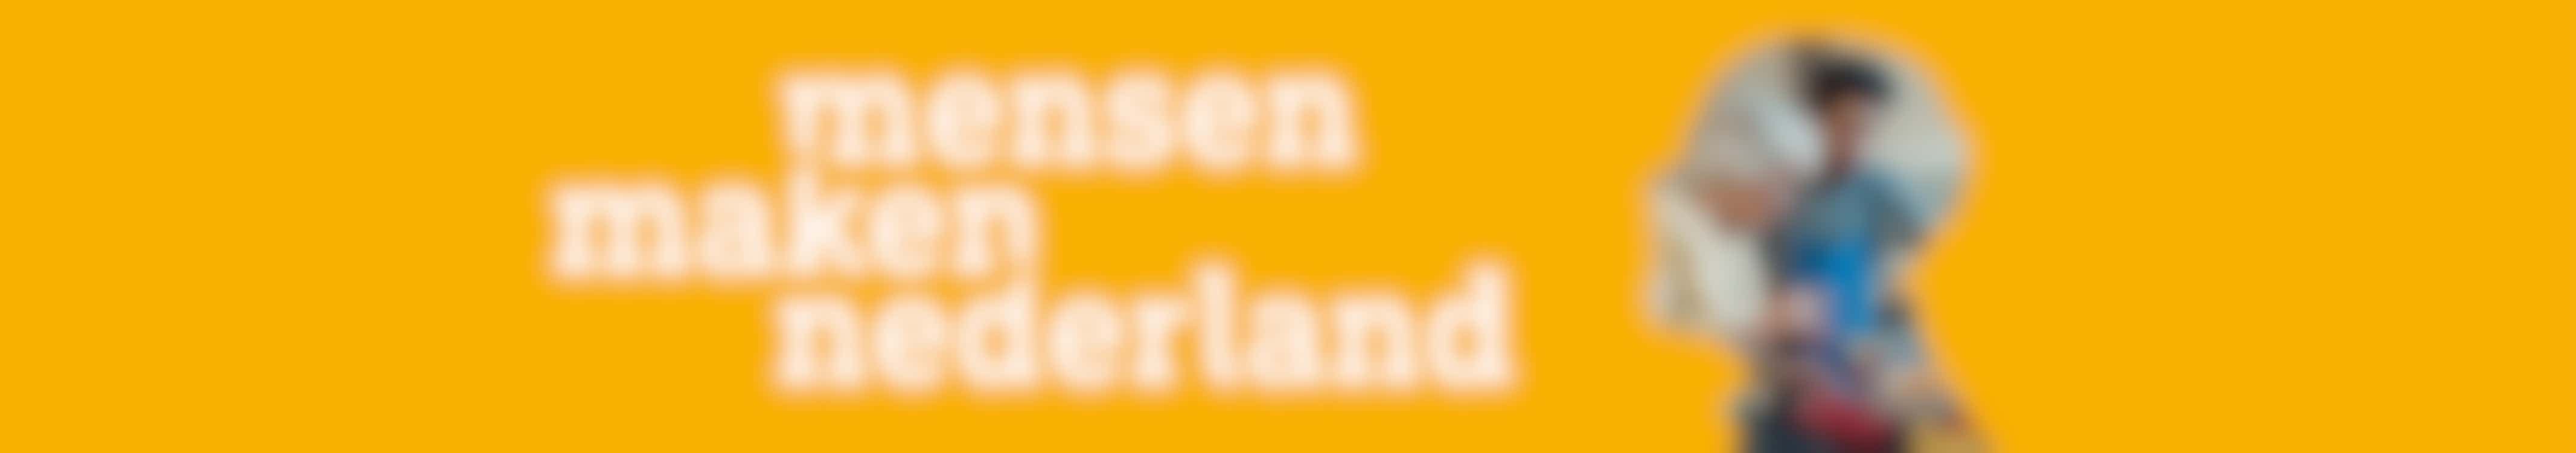 Banner Mensen maken Nederland